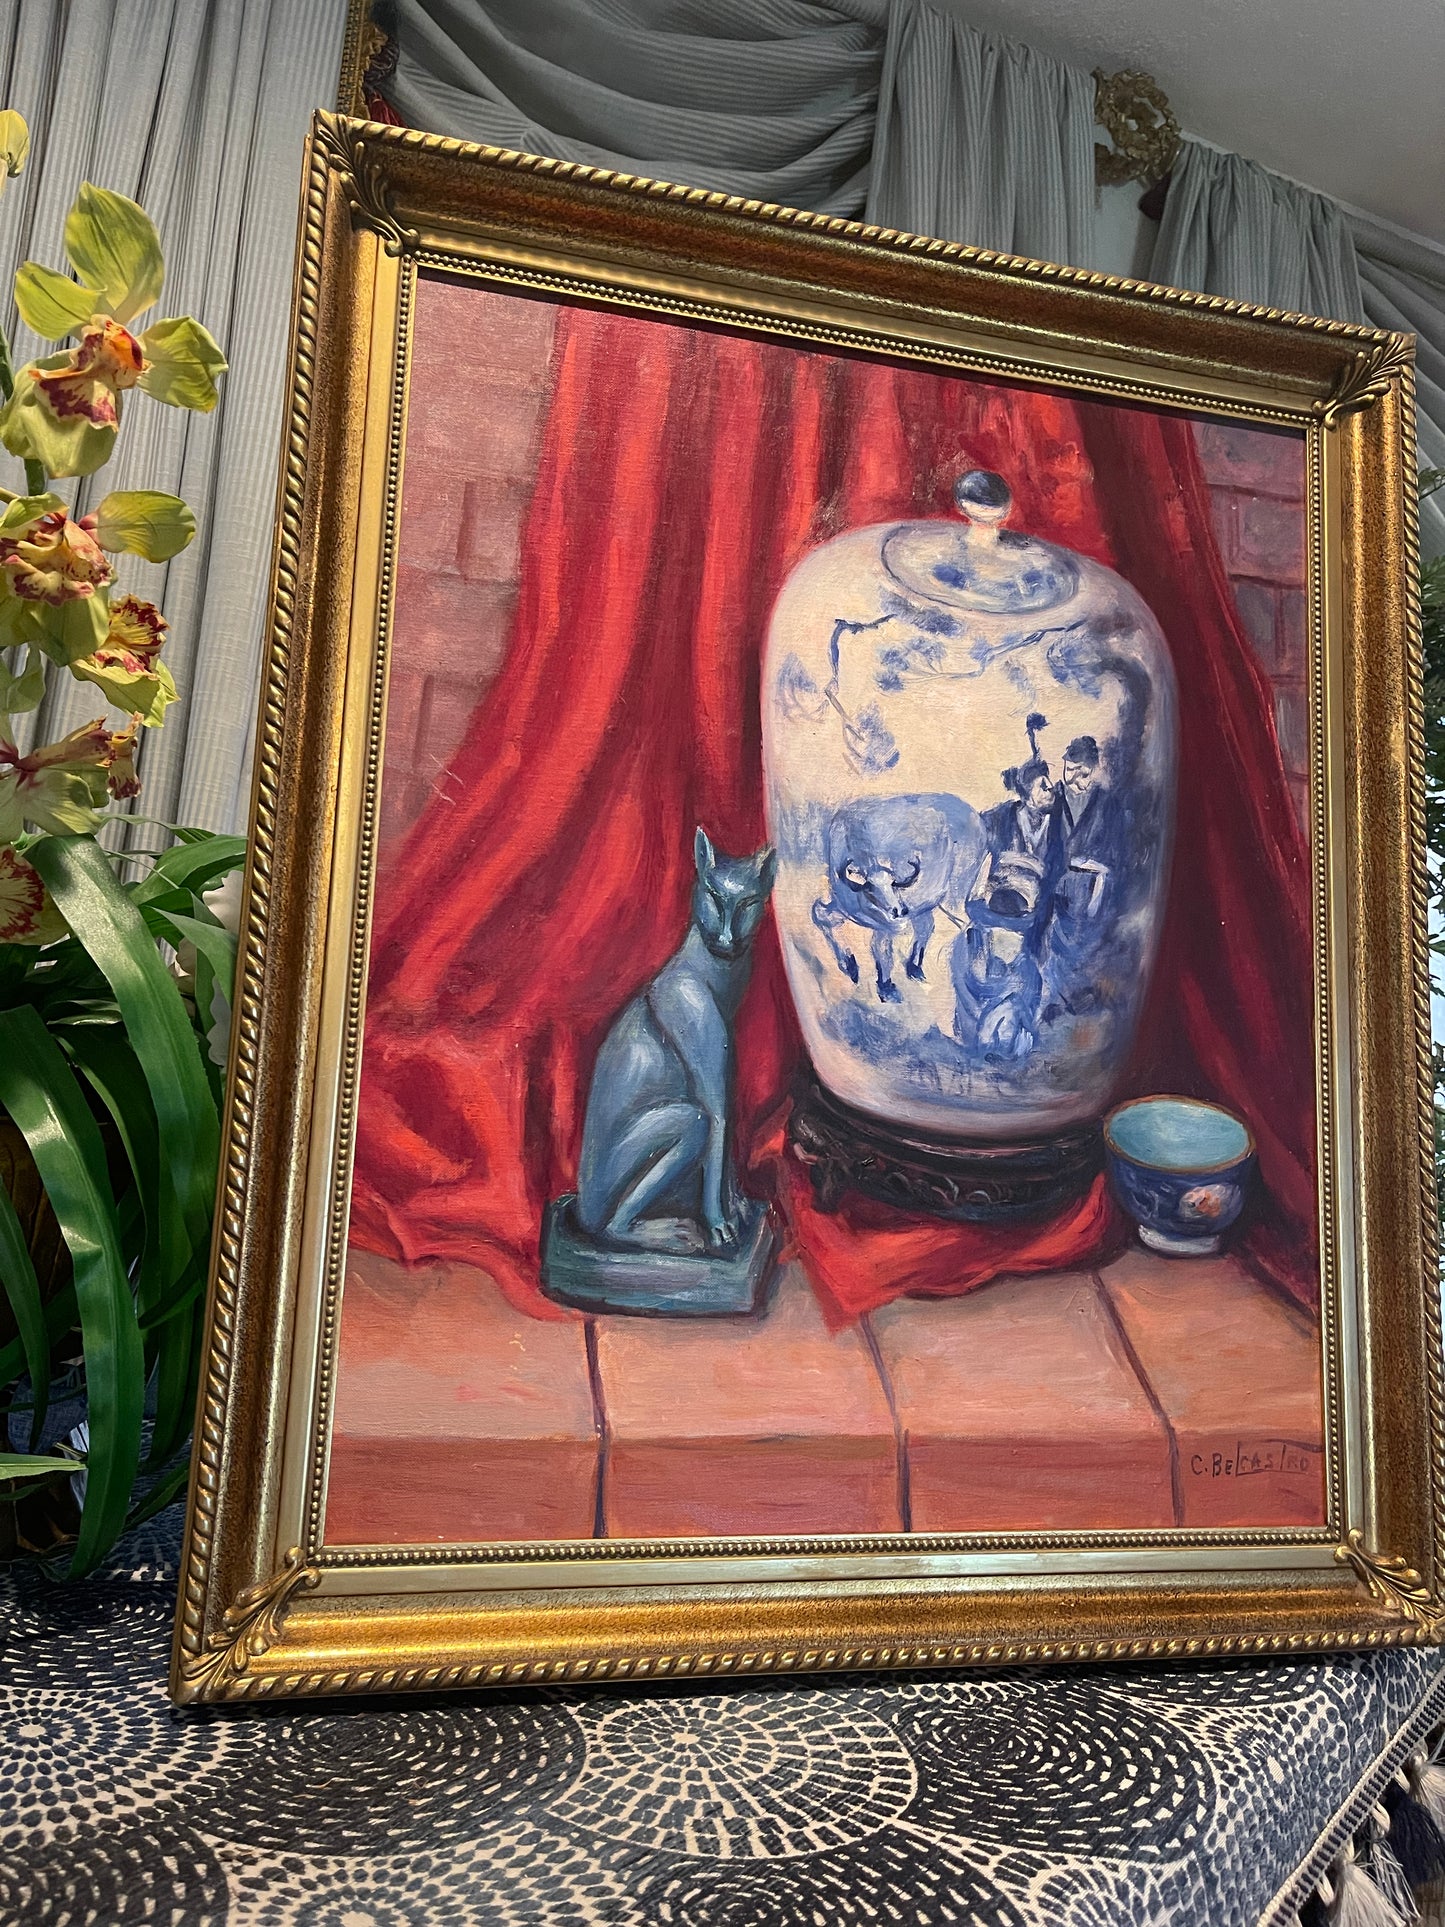 Fantastic Chinoiserie Vintage Oil Painting, Blue and White Ginger Jar, Ornate Gold Frame, Artist Signed